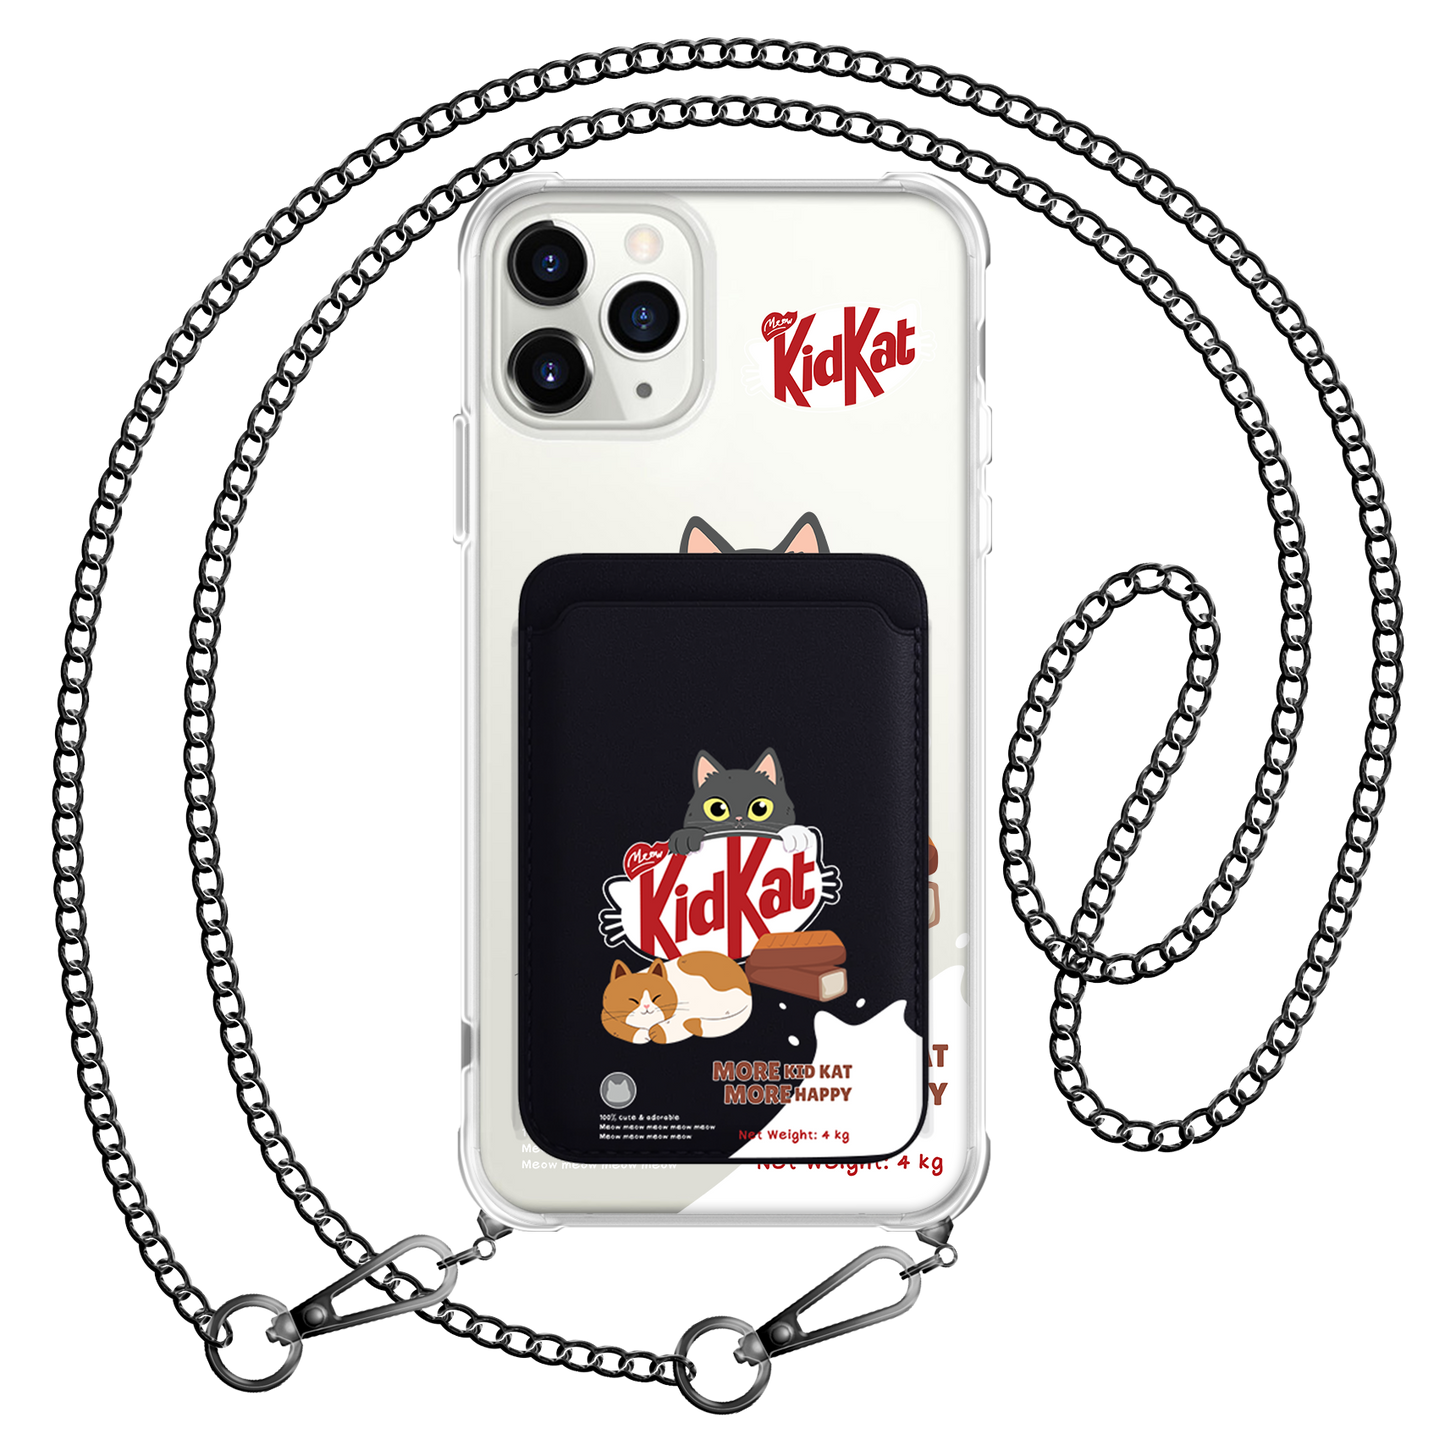 iPhone Magnetic Wallet Case - Kidkat